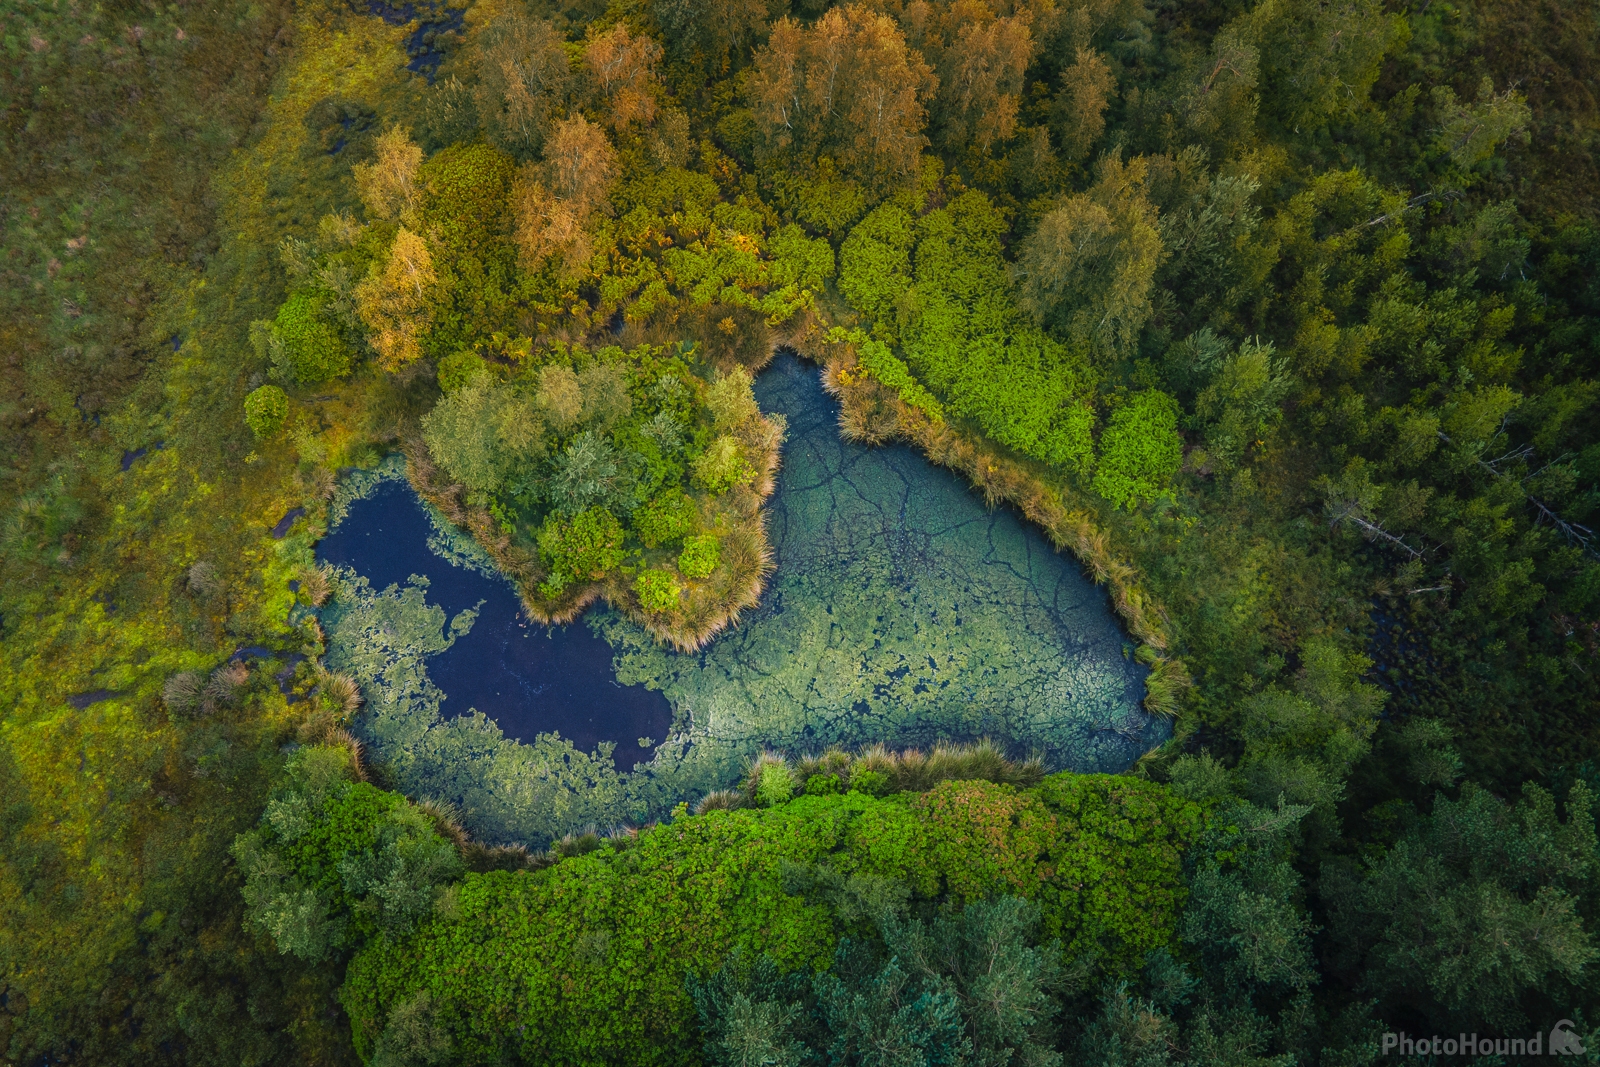 Image of Dersingham Bog by James Billings.